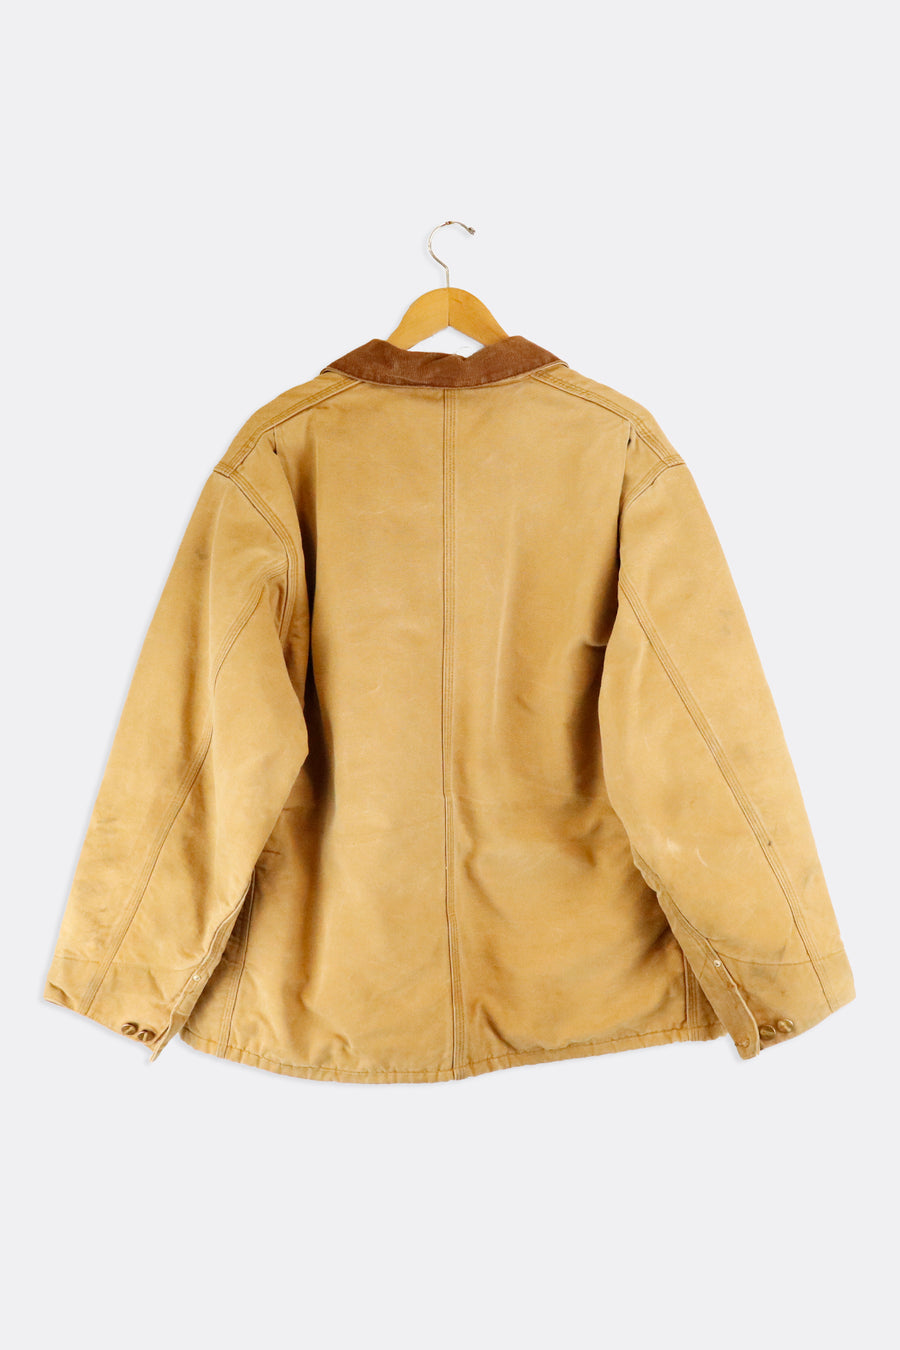 Vintage Carhartt Blanket Lined Chore Brown Corduroy Collared Jacket Sz XL